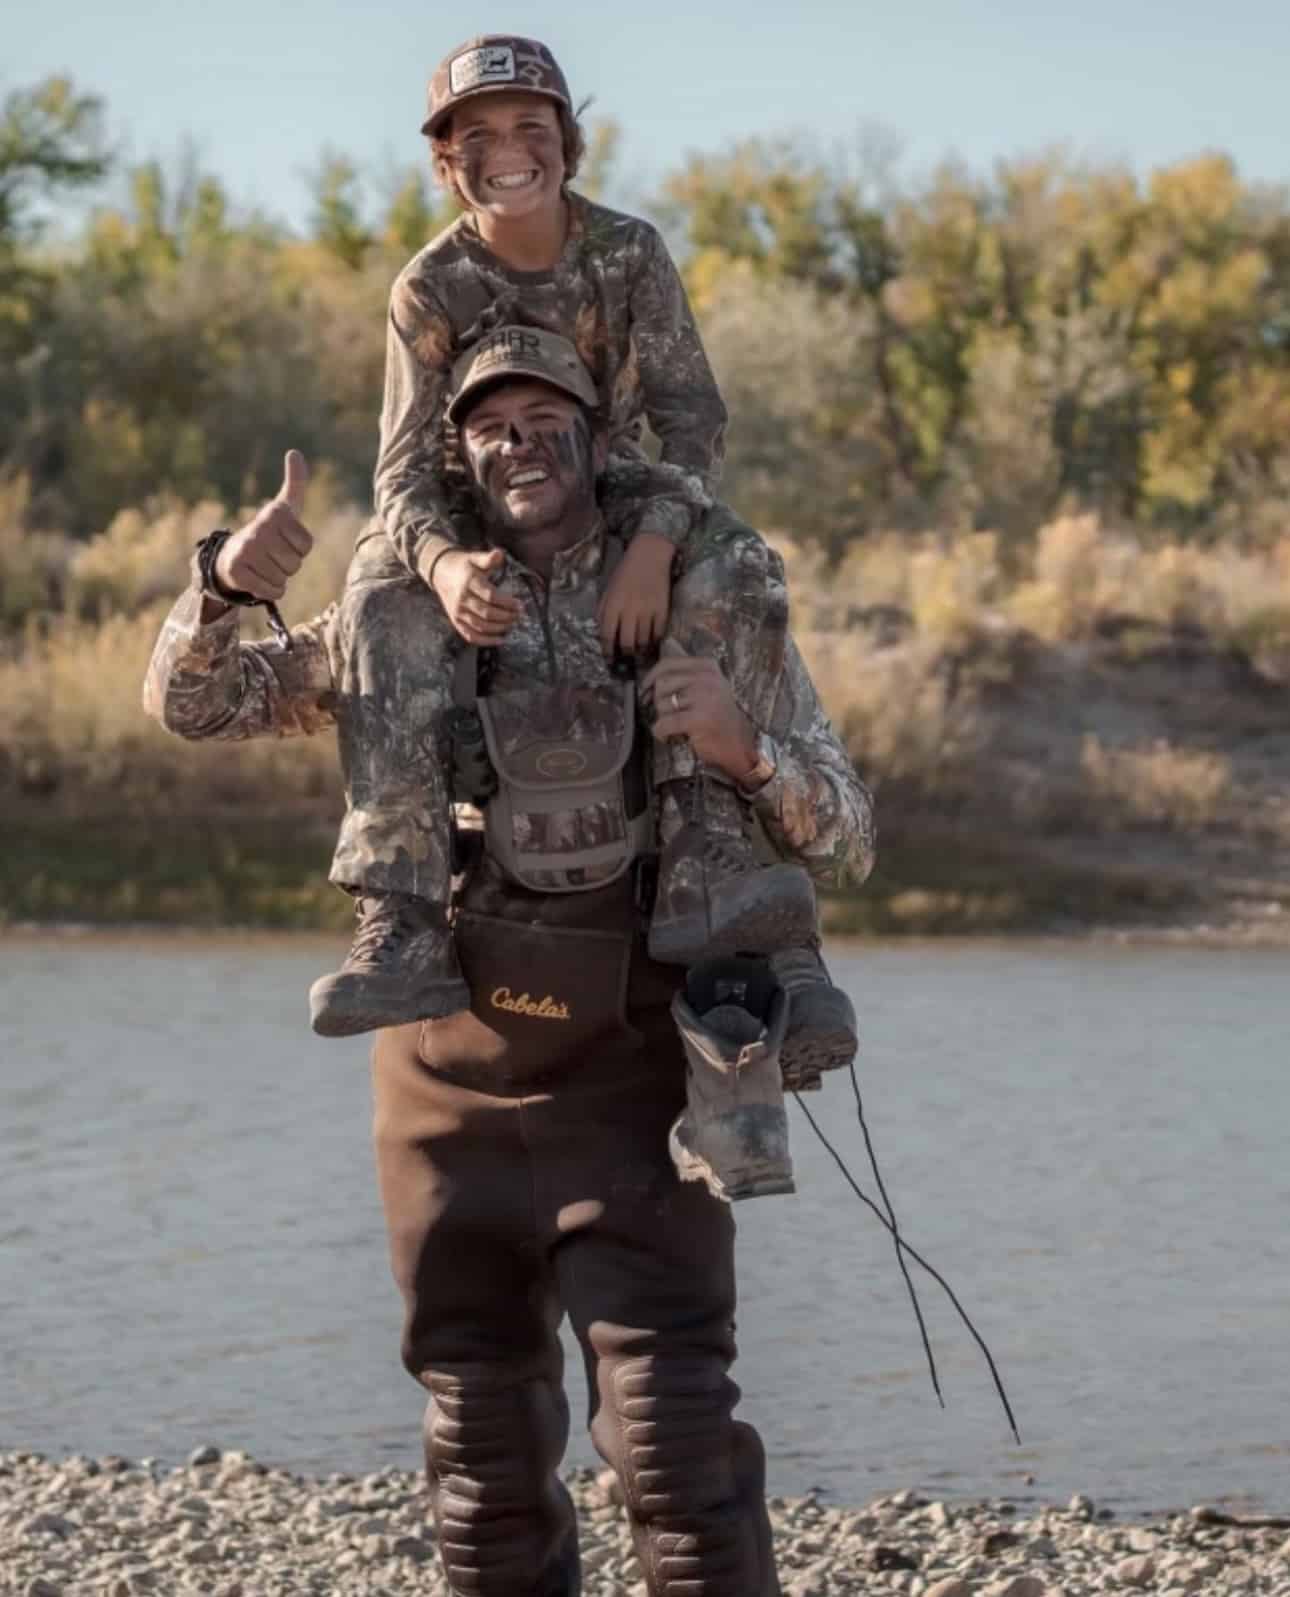 Luke Bryan and his son Tate hunting.